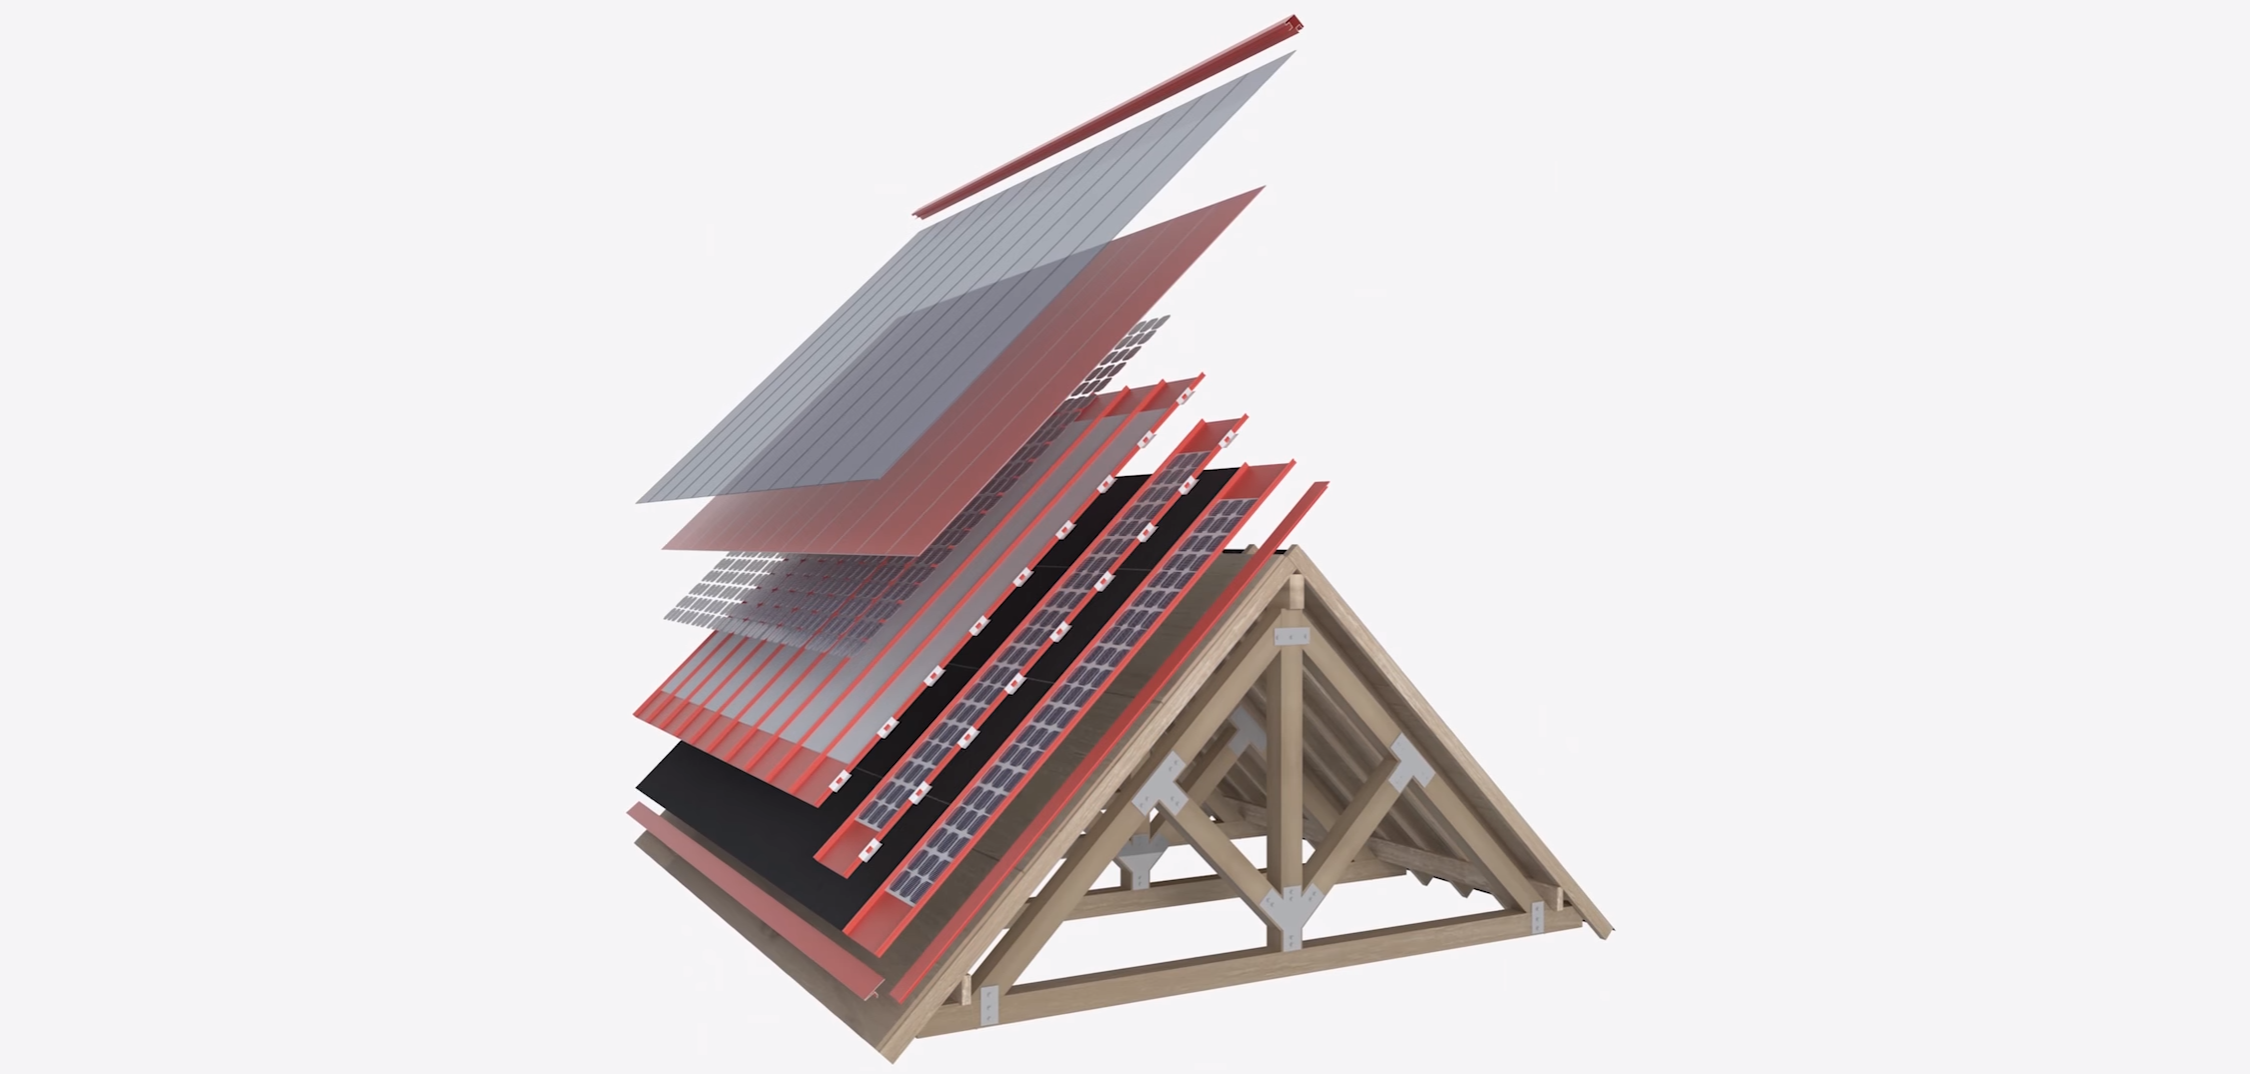 Tesla/SolarCity's 'Solar Roof' is not a solar shingle but 'very similar